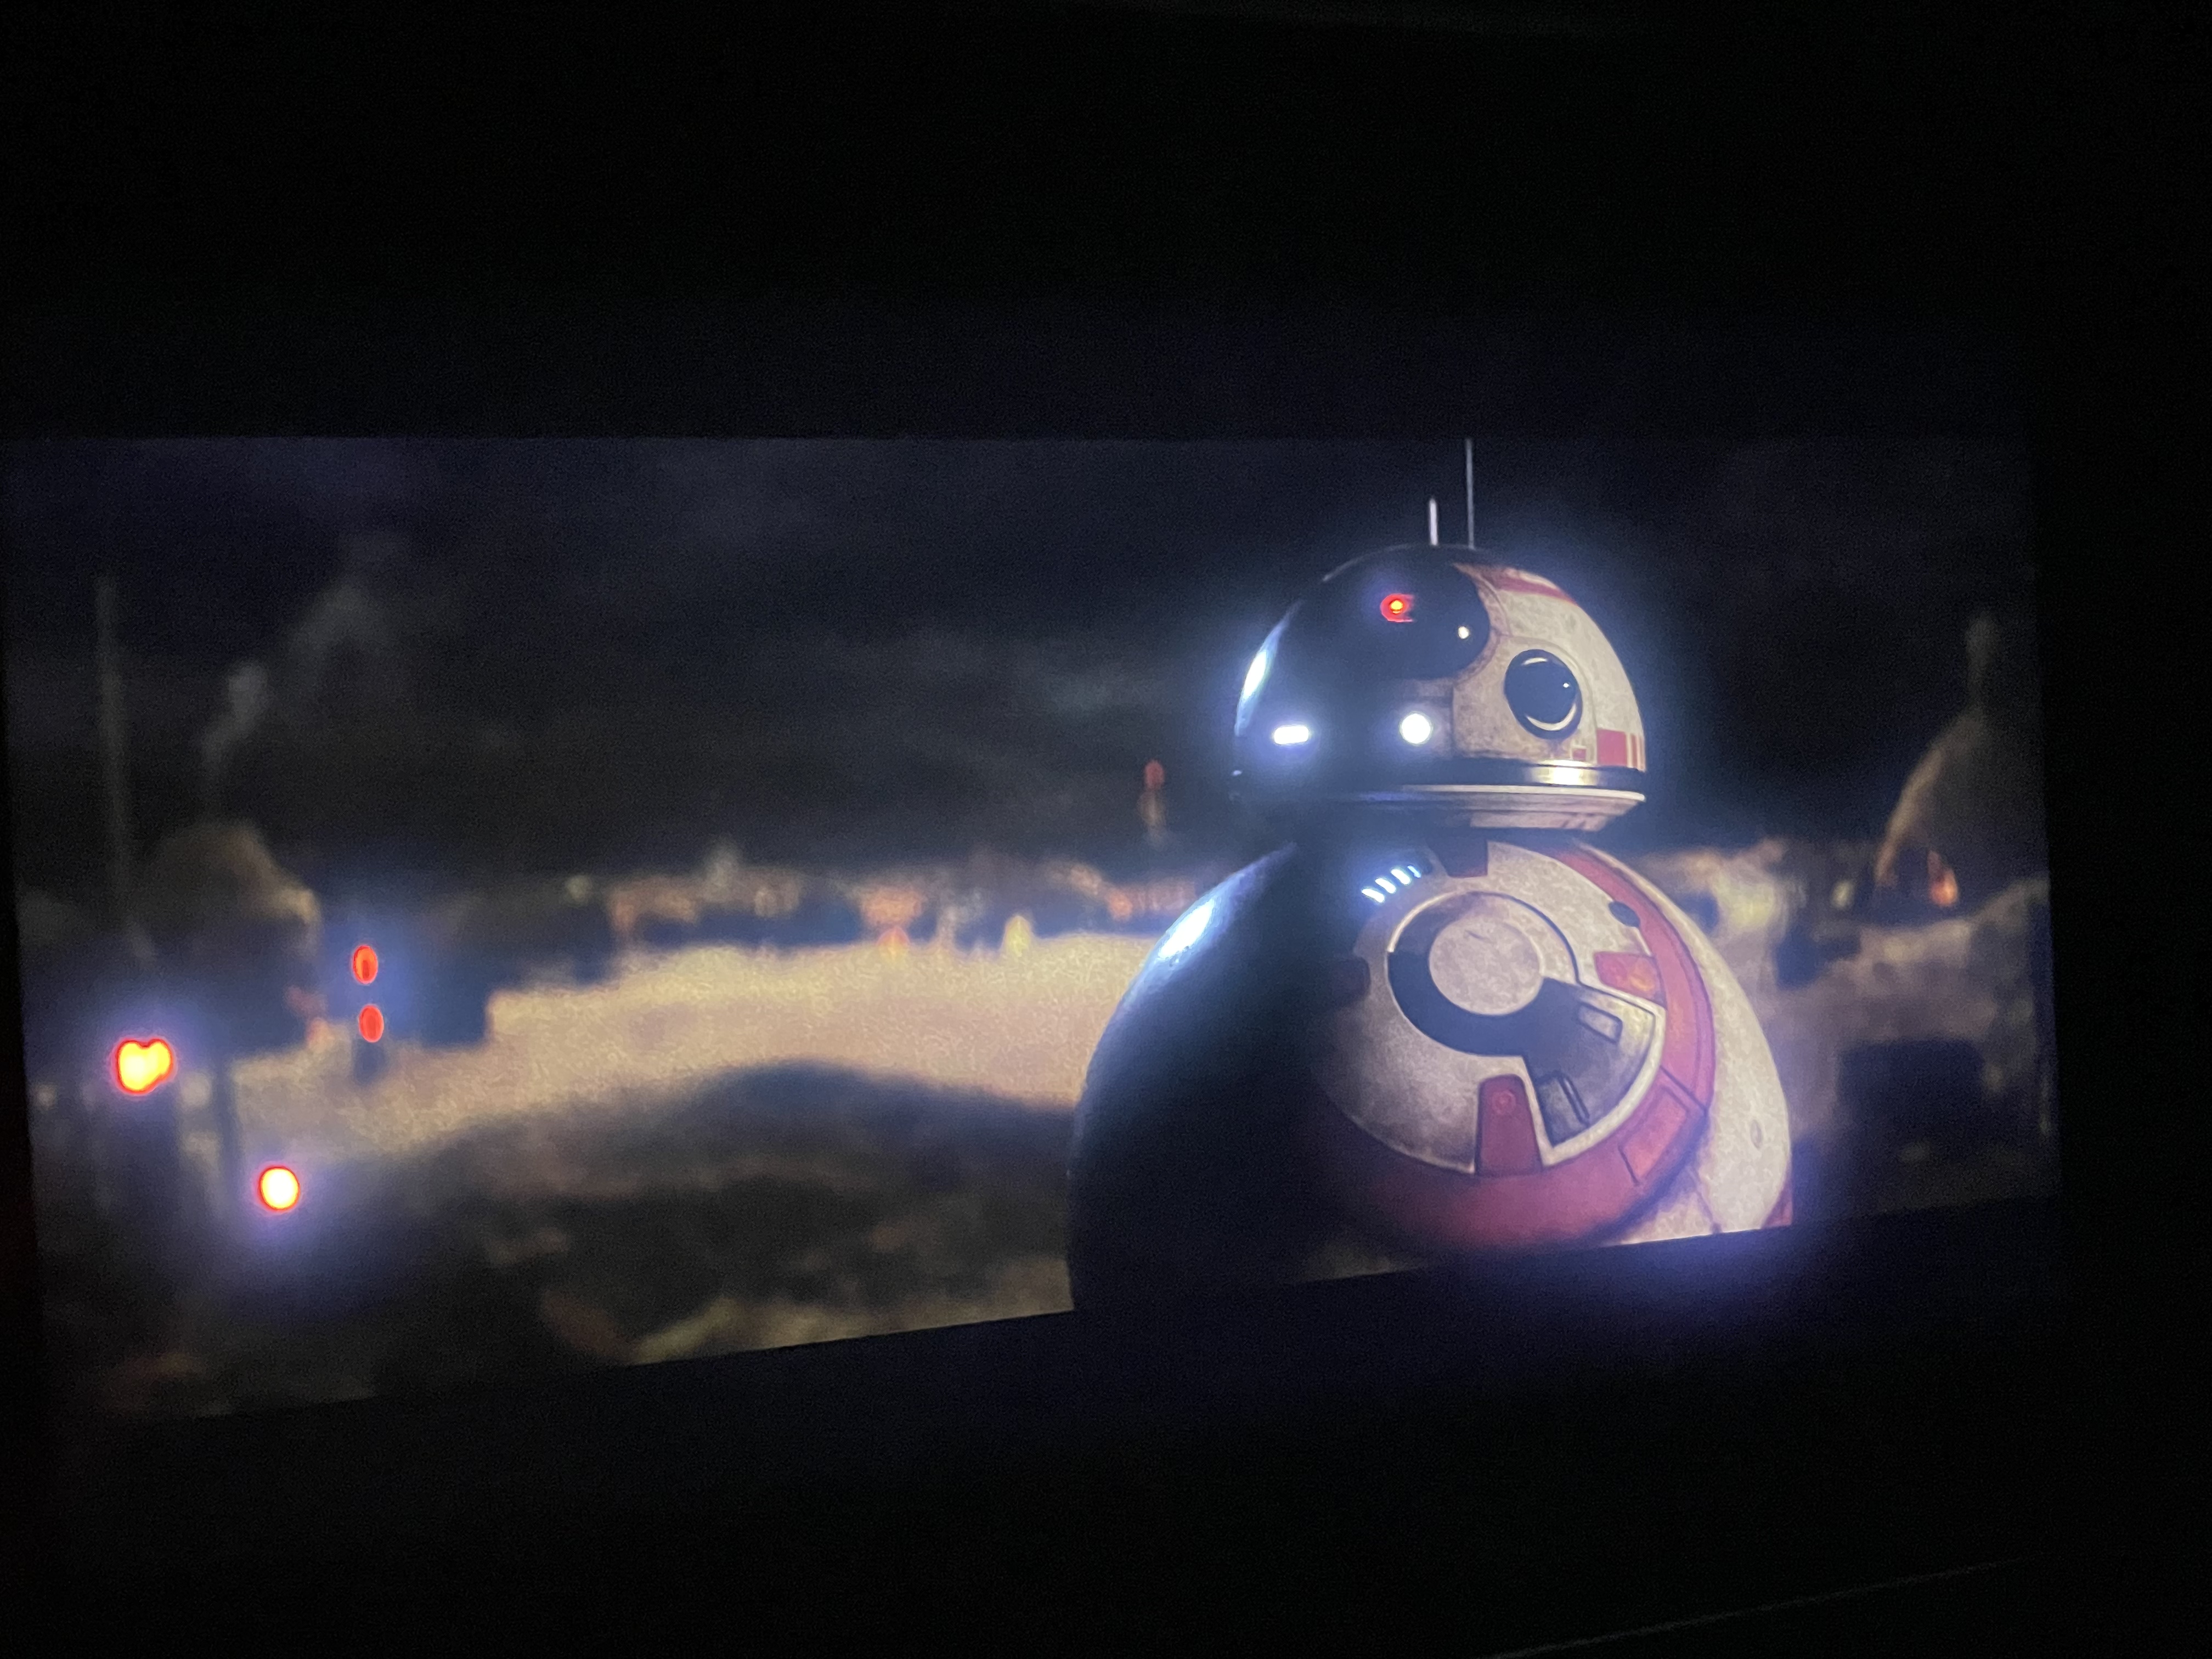 Star Wars: The Force Awakens on Liquid Retina XDR again